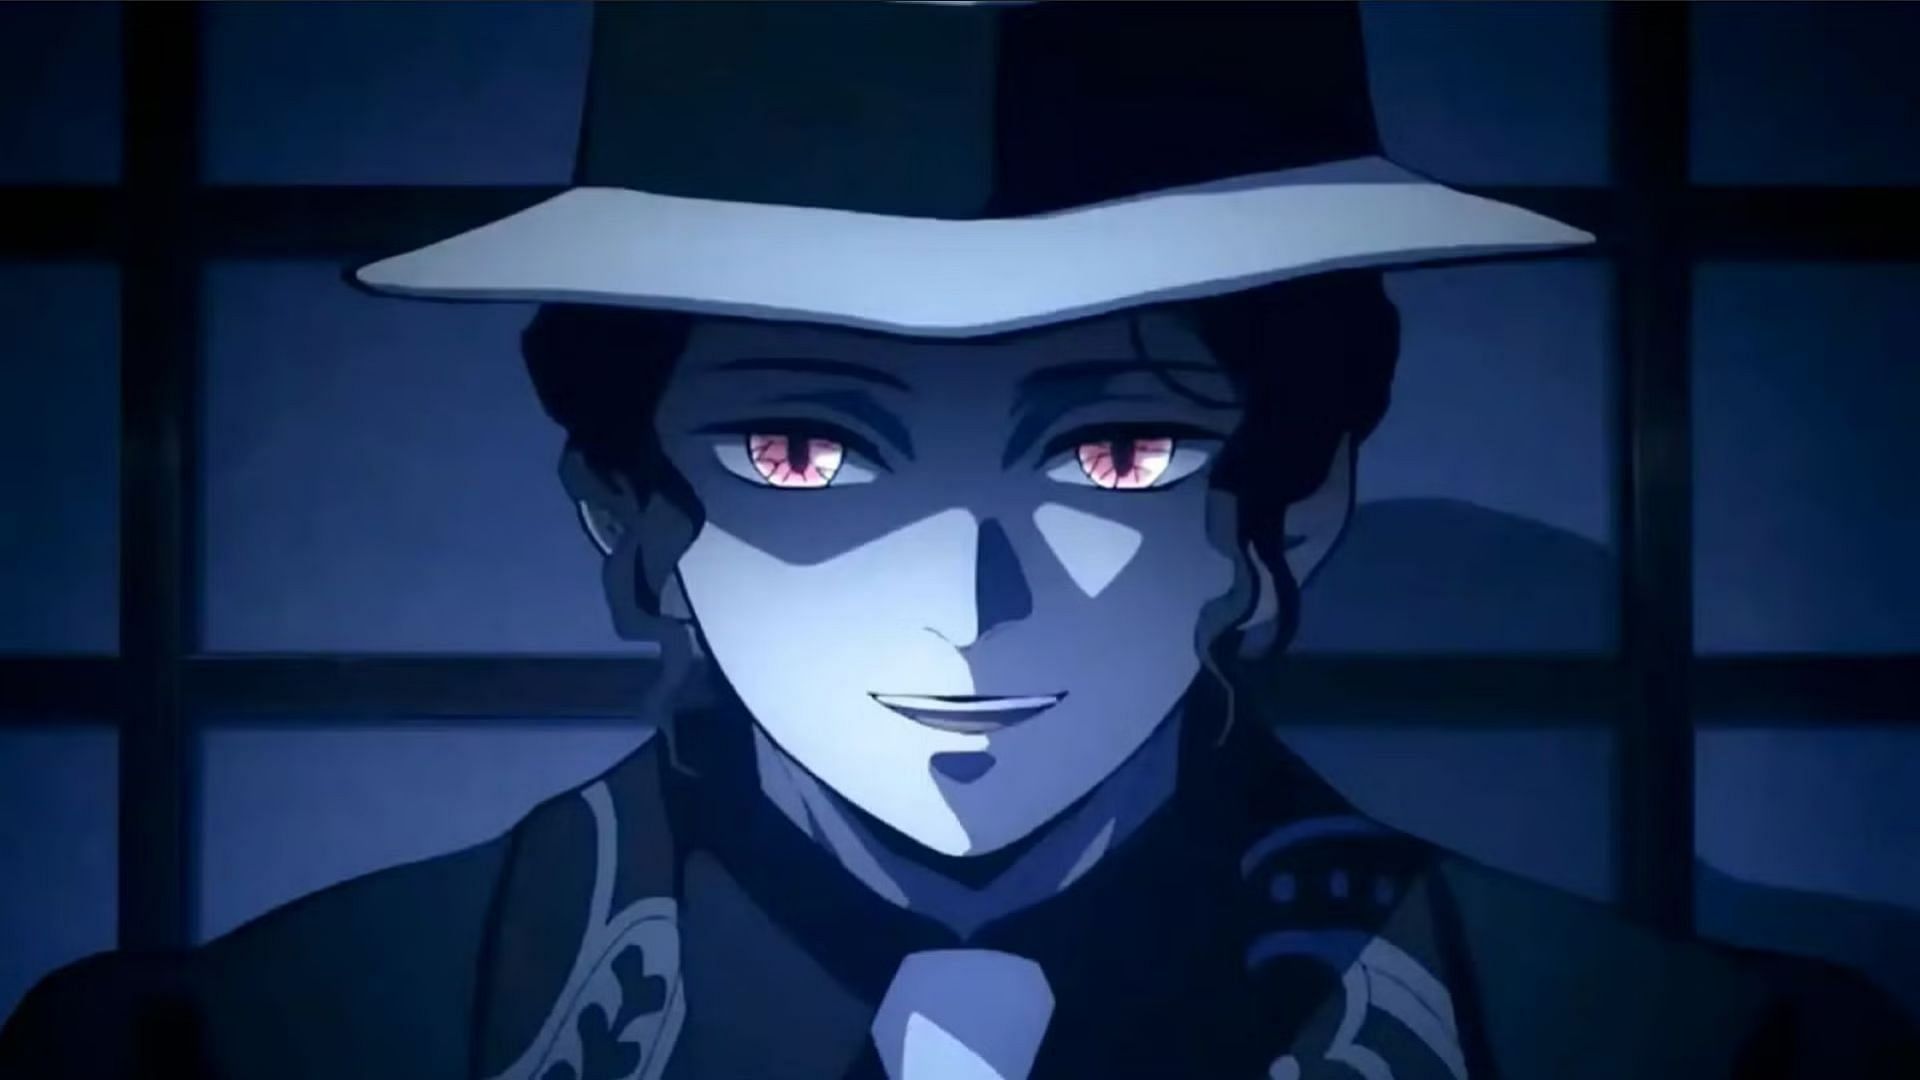 Kibutsuji Muzan as shown in the anime (Image via Studio Ufotable)